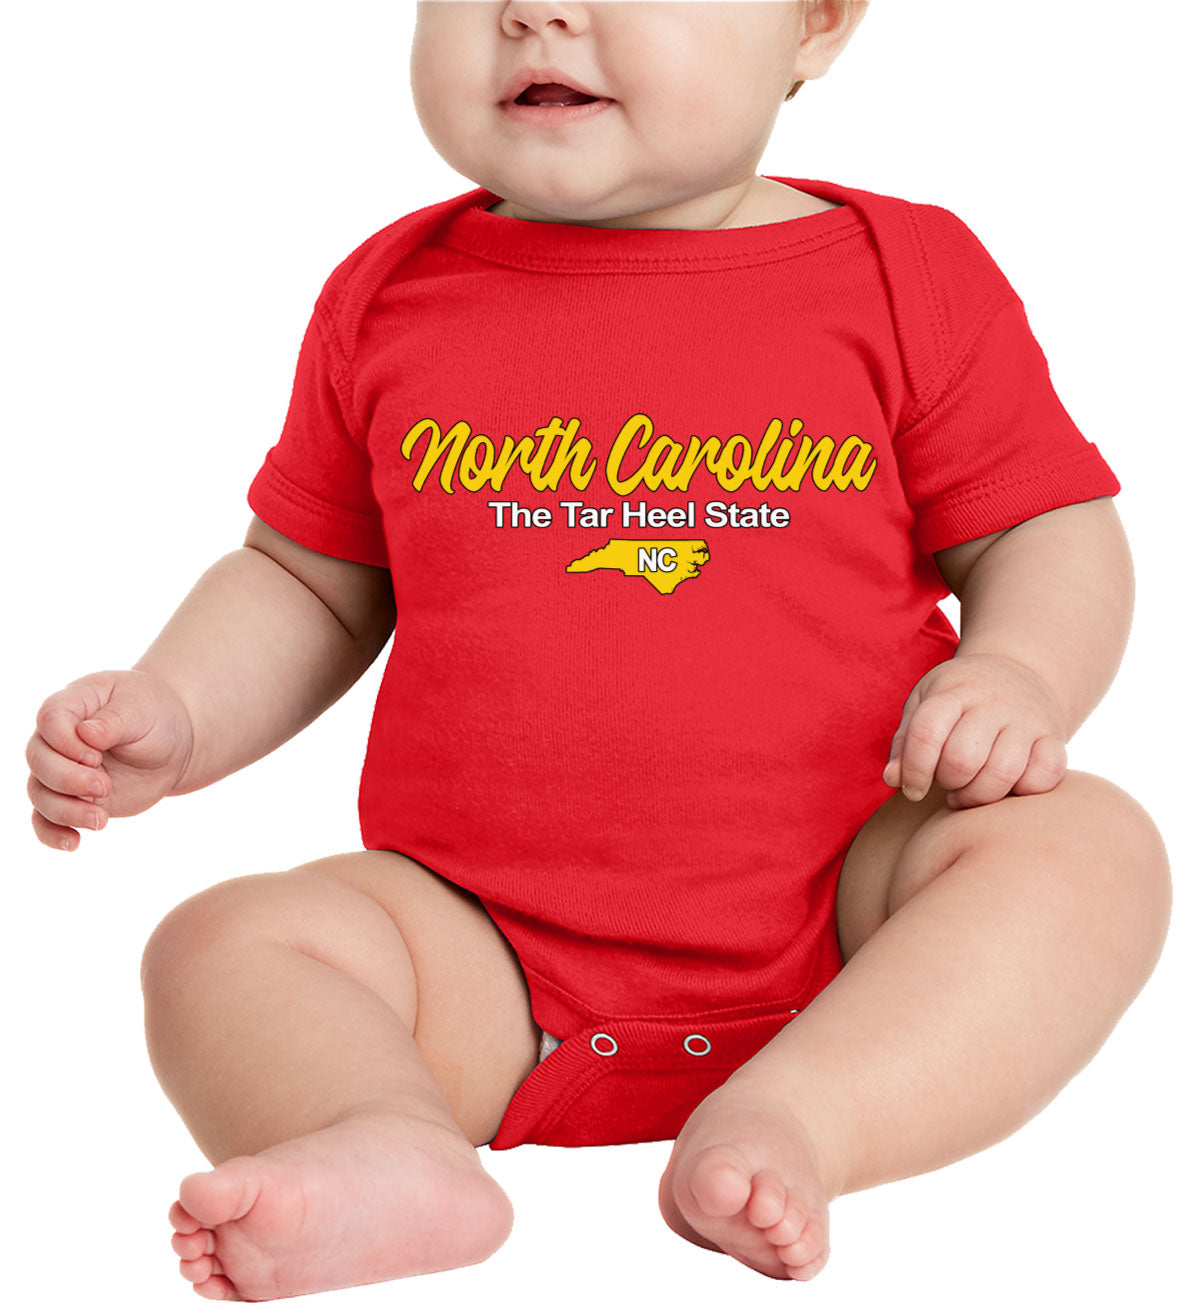 North Carolina The Tar Heel State Baby Onesie